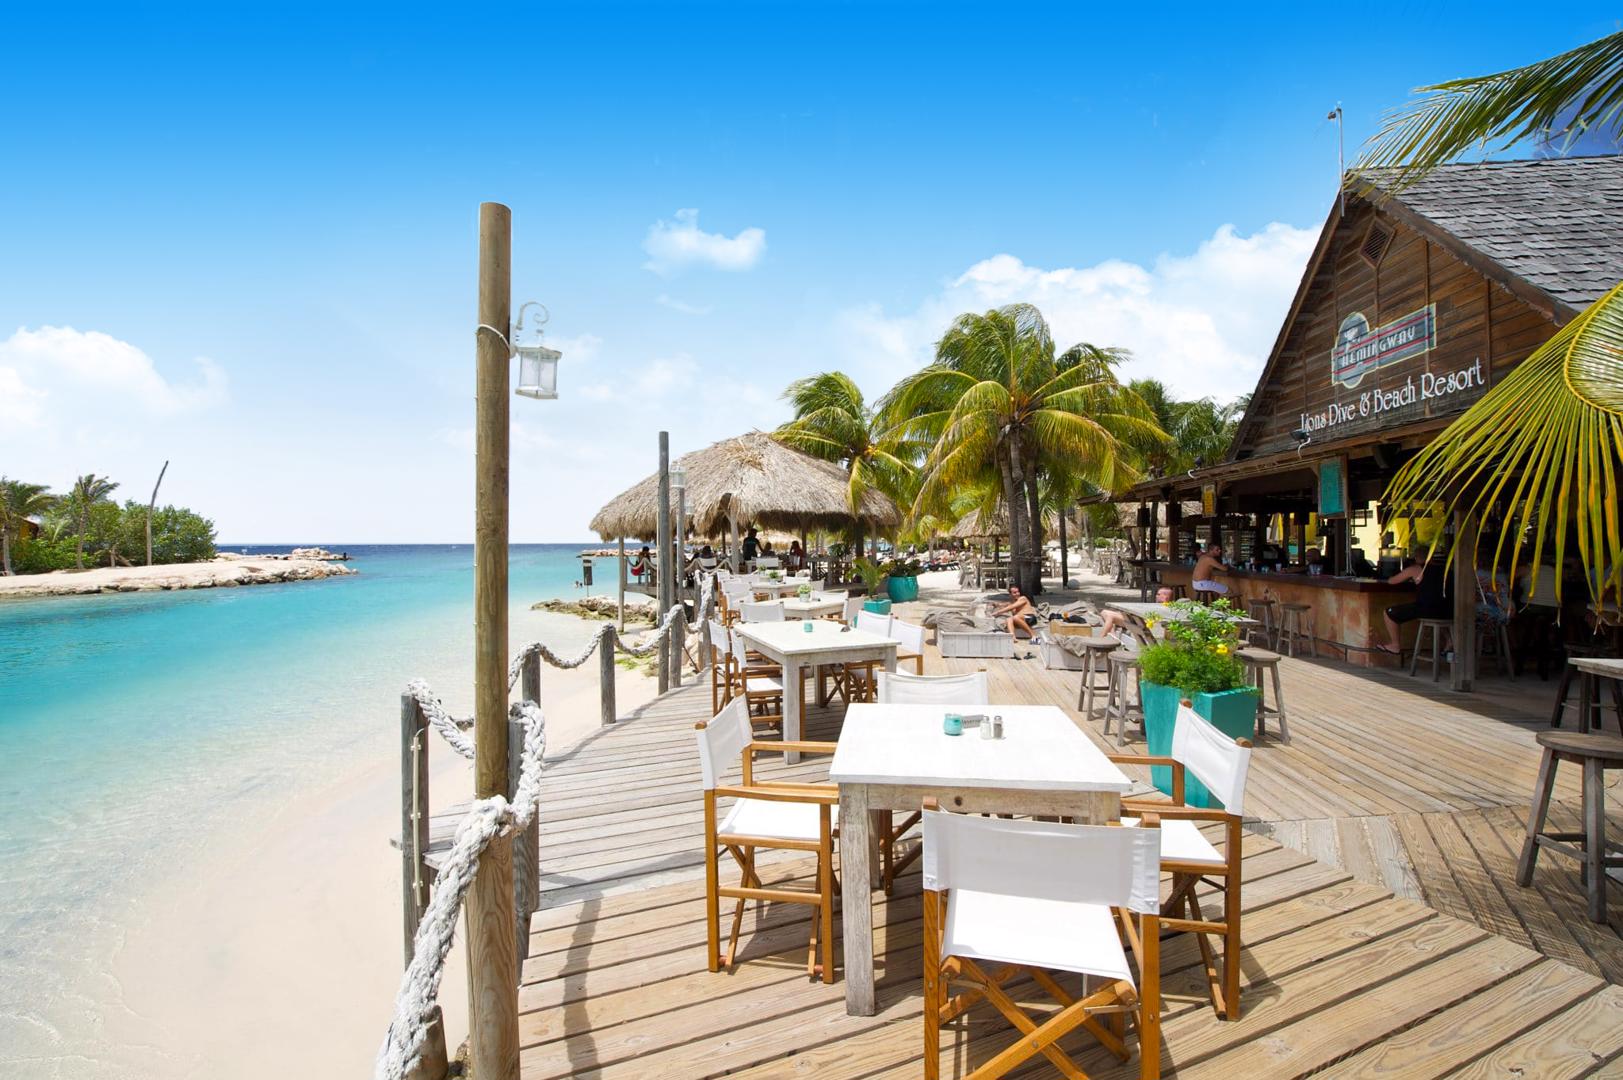 LionsDive Beach Resort - Willemstad - Curacao